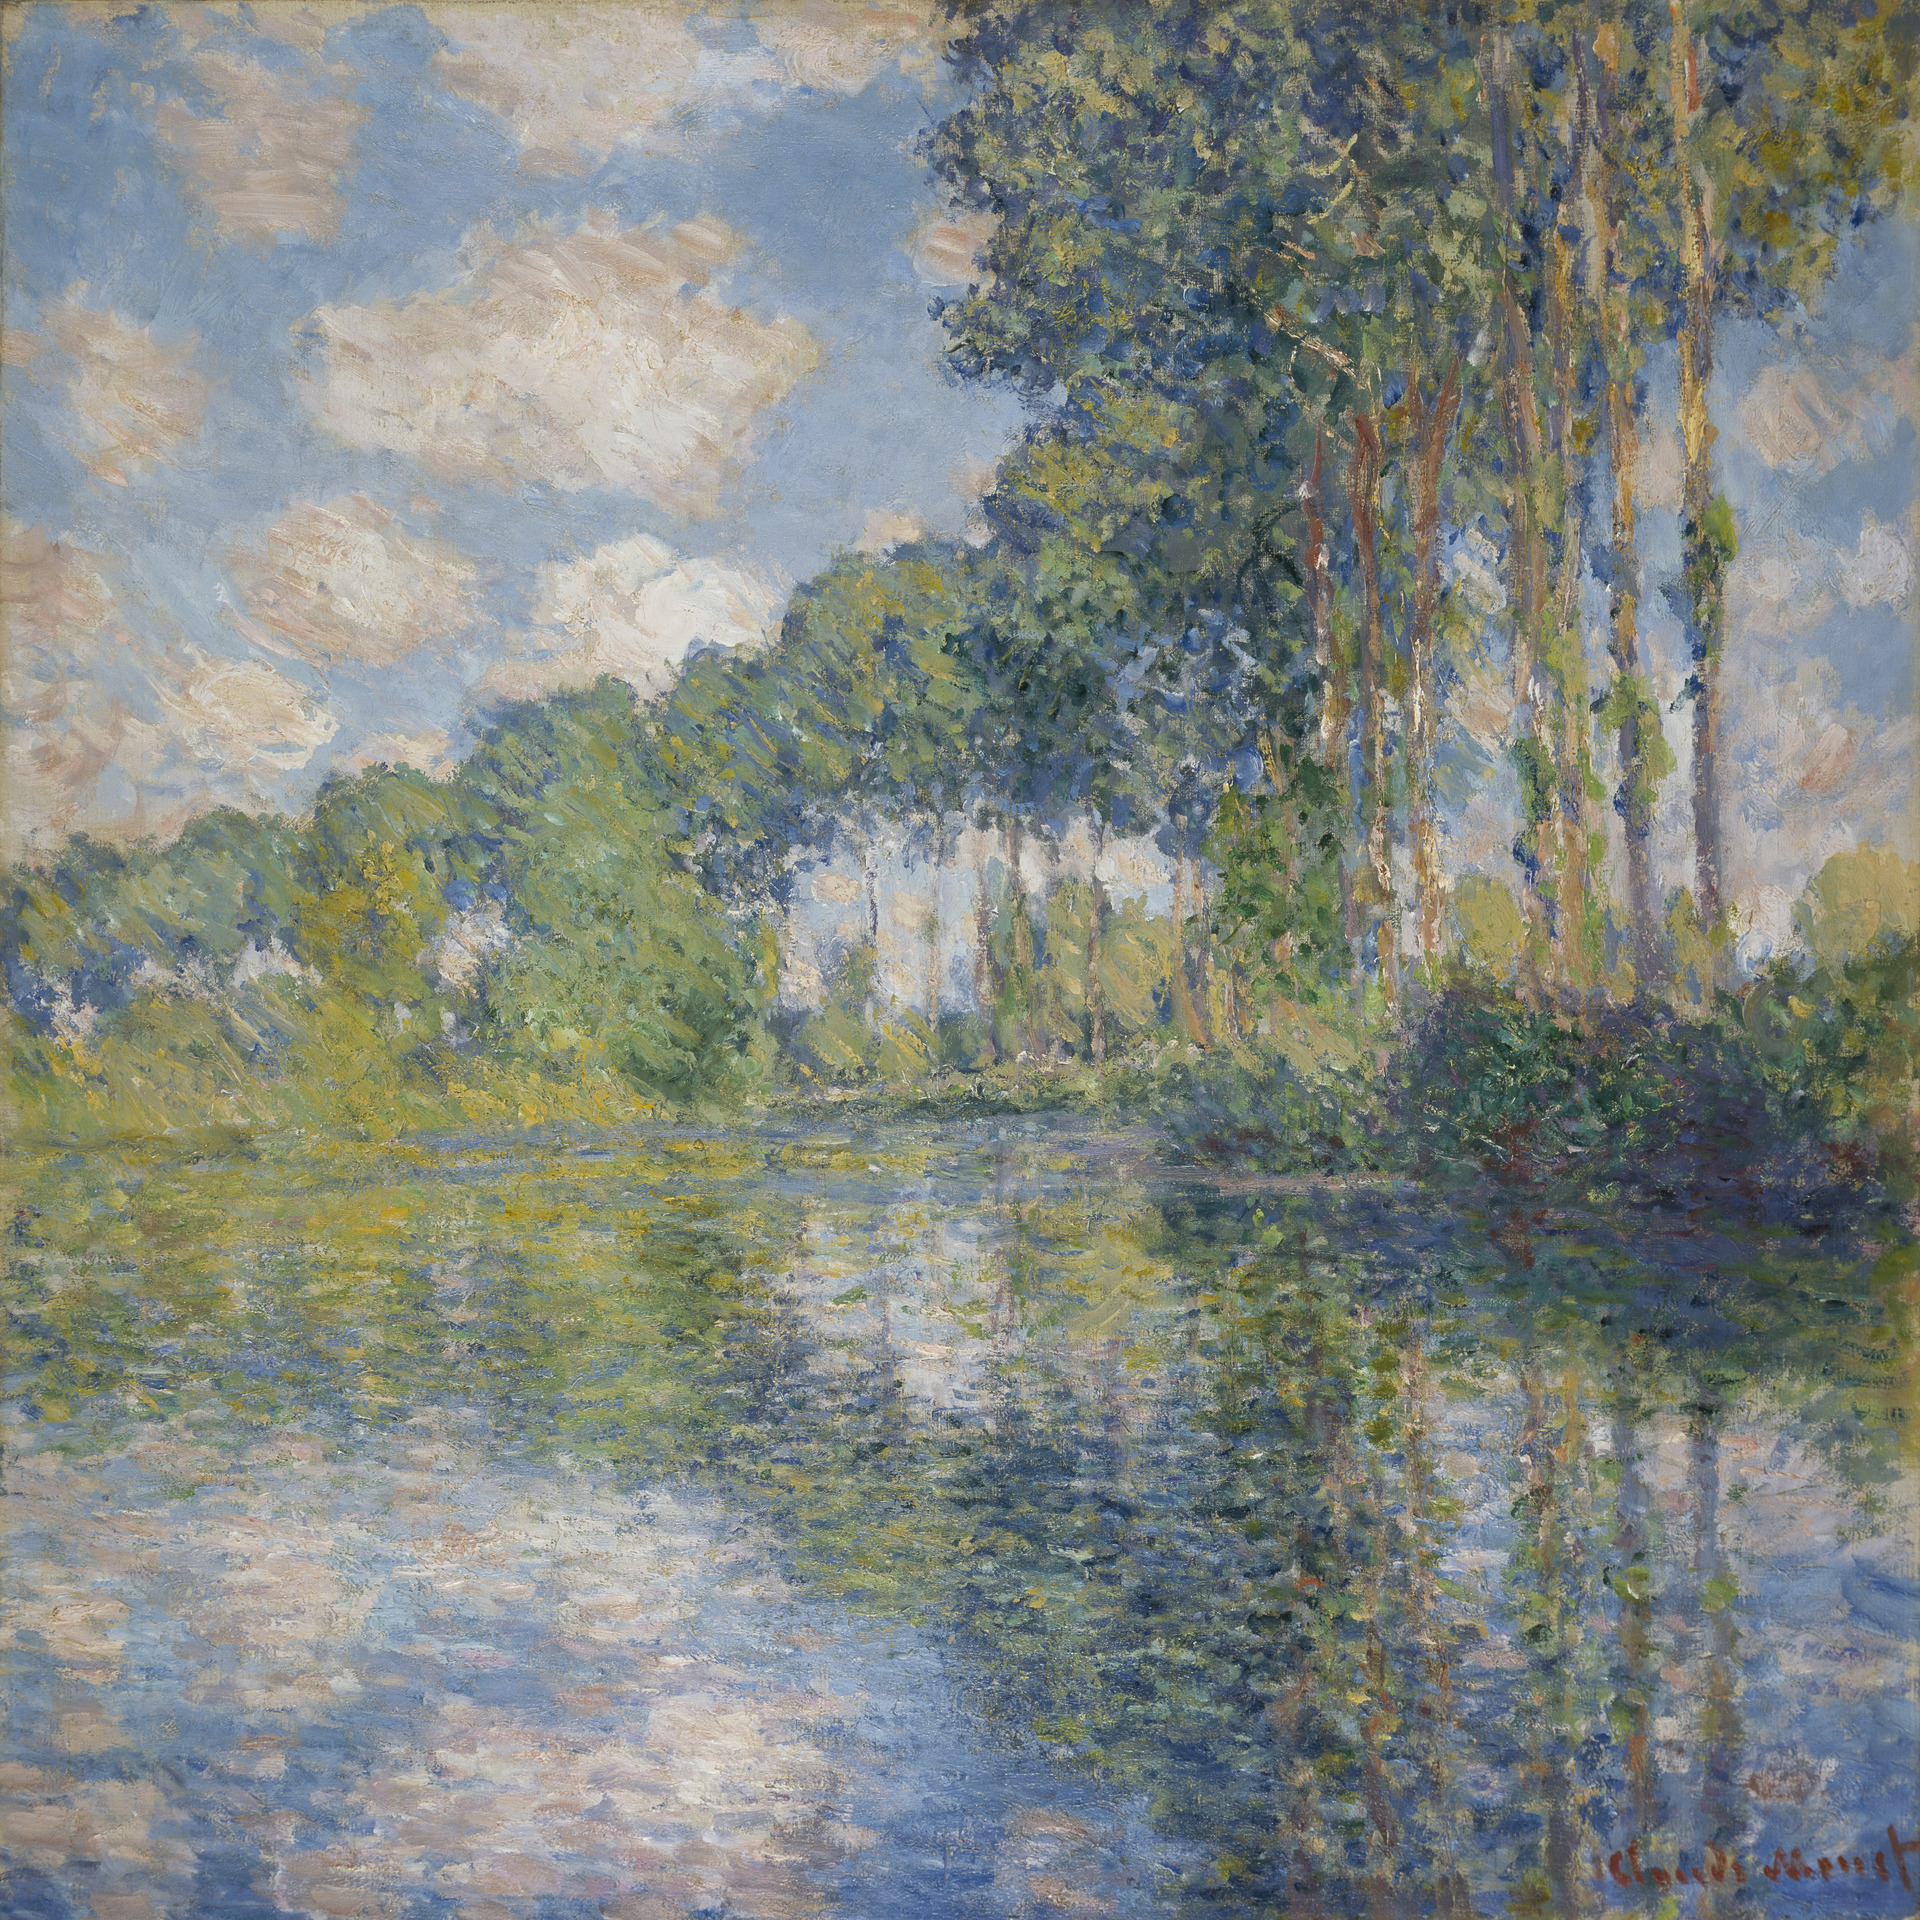 Pastoral scene from Claude Monet.